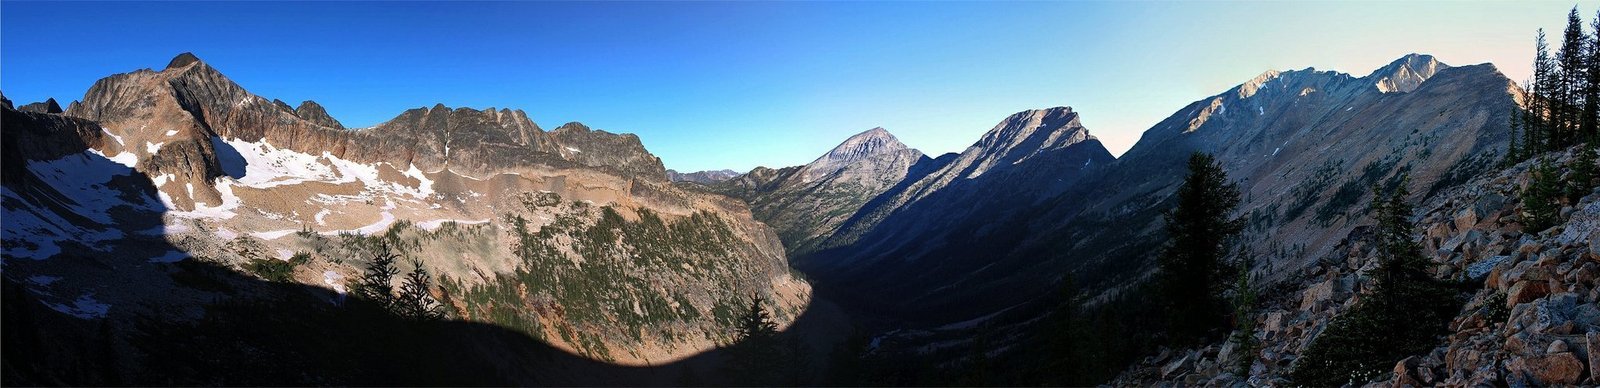 Blackcap Mountain to Mount Lago panoramic view